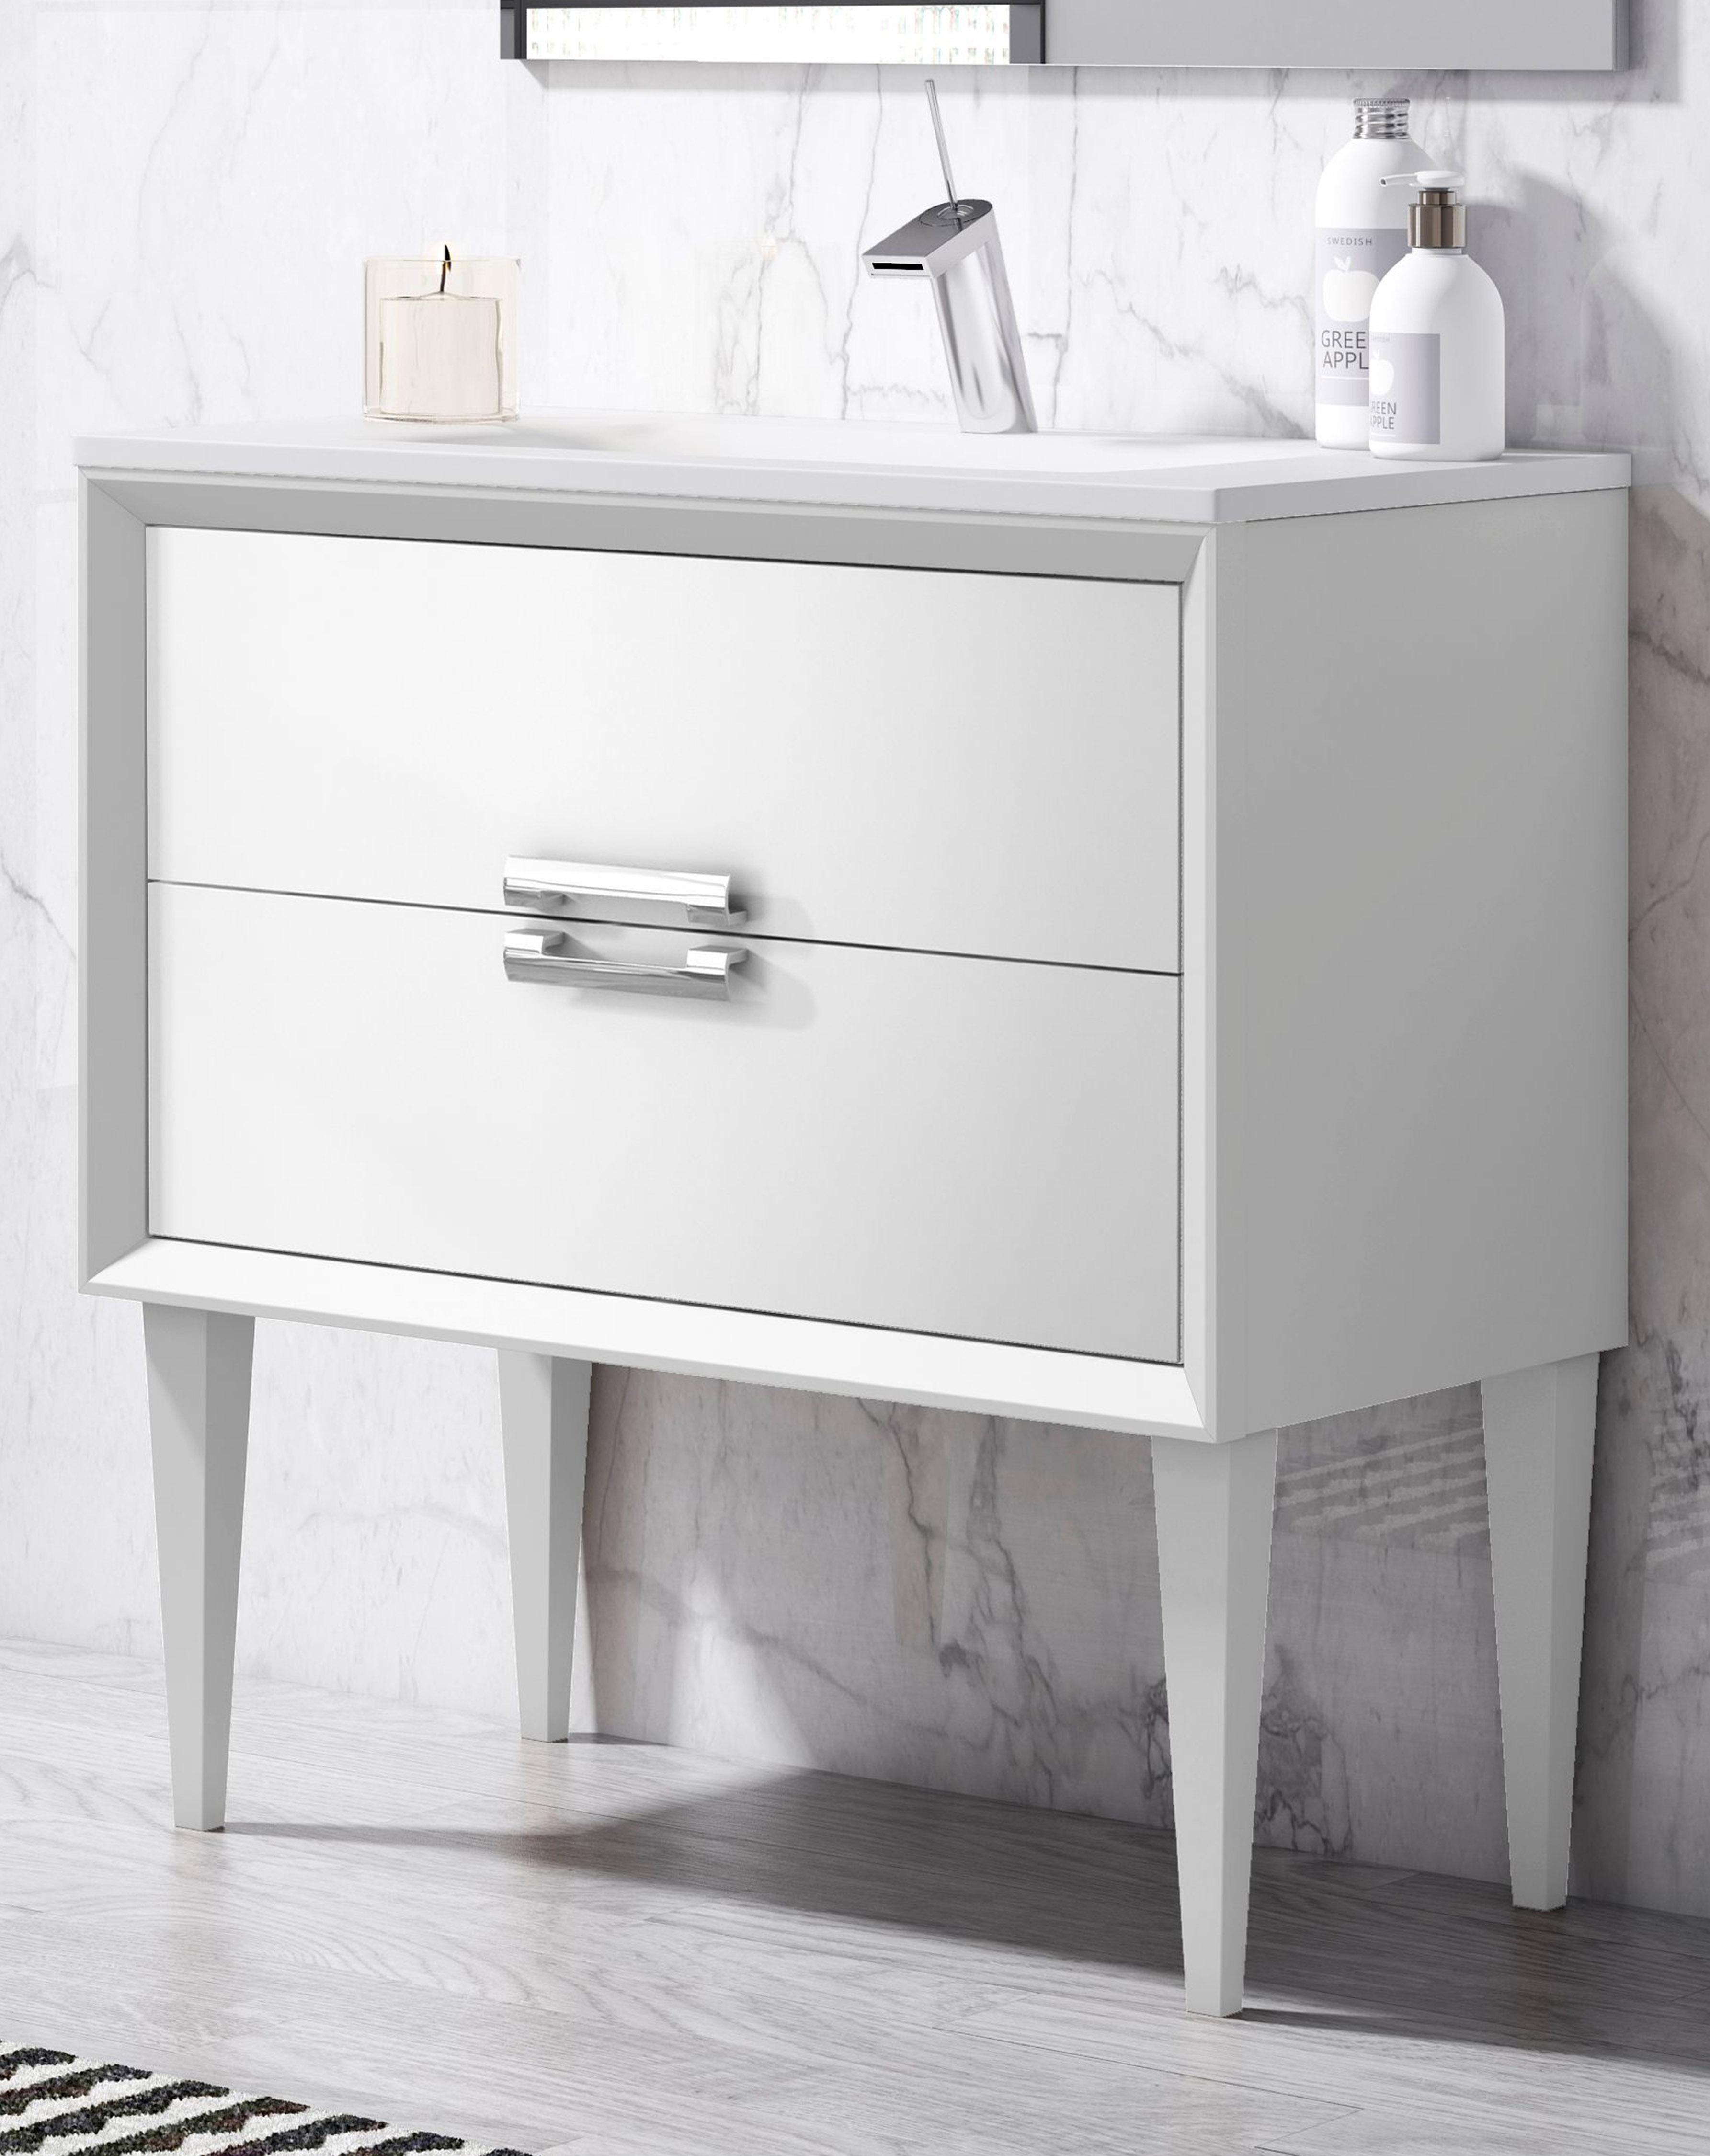 24" Single Sink Freestanding Vanity 2 Drawer Ceramic Sink with 4 Color Options